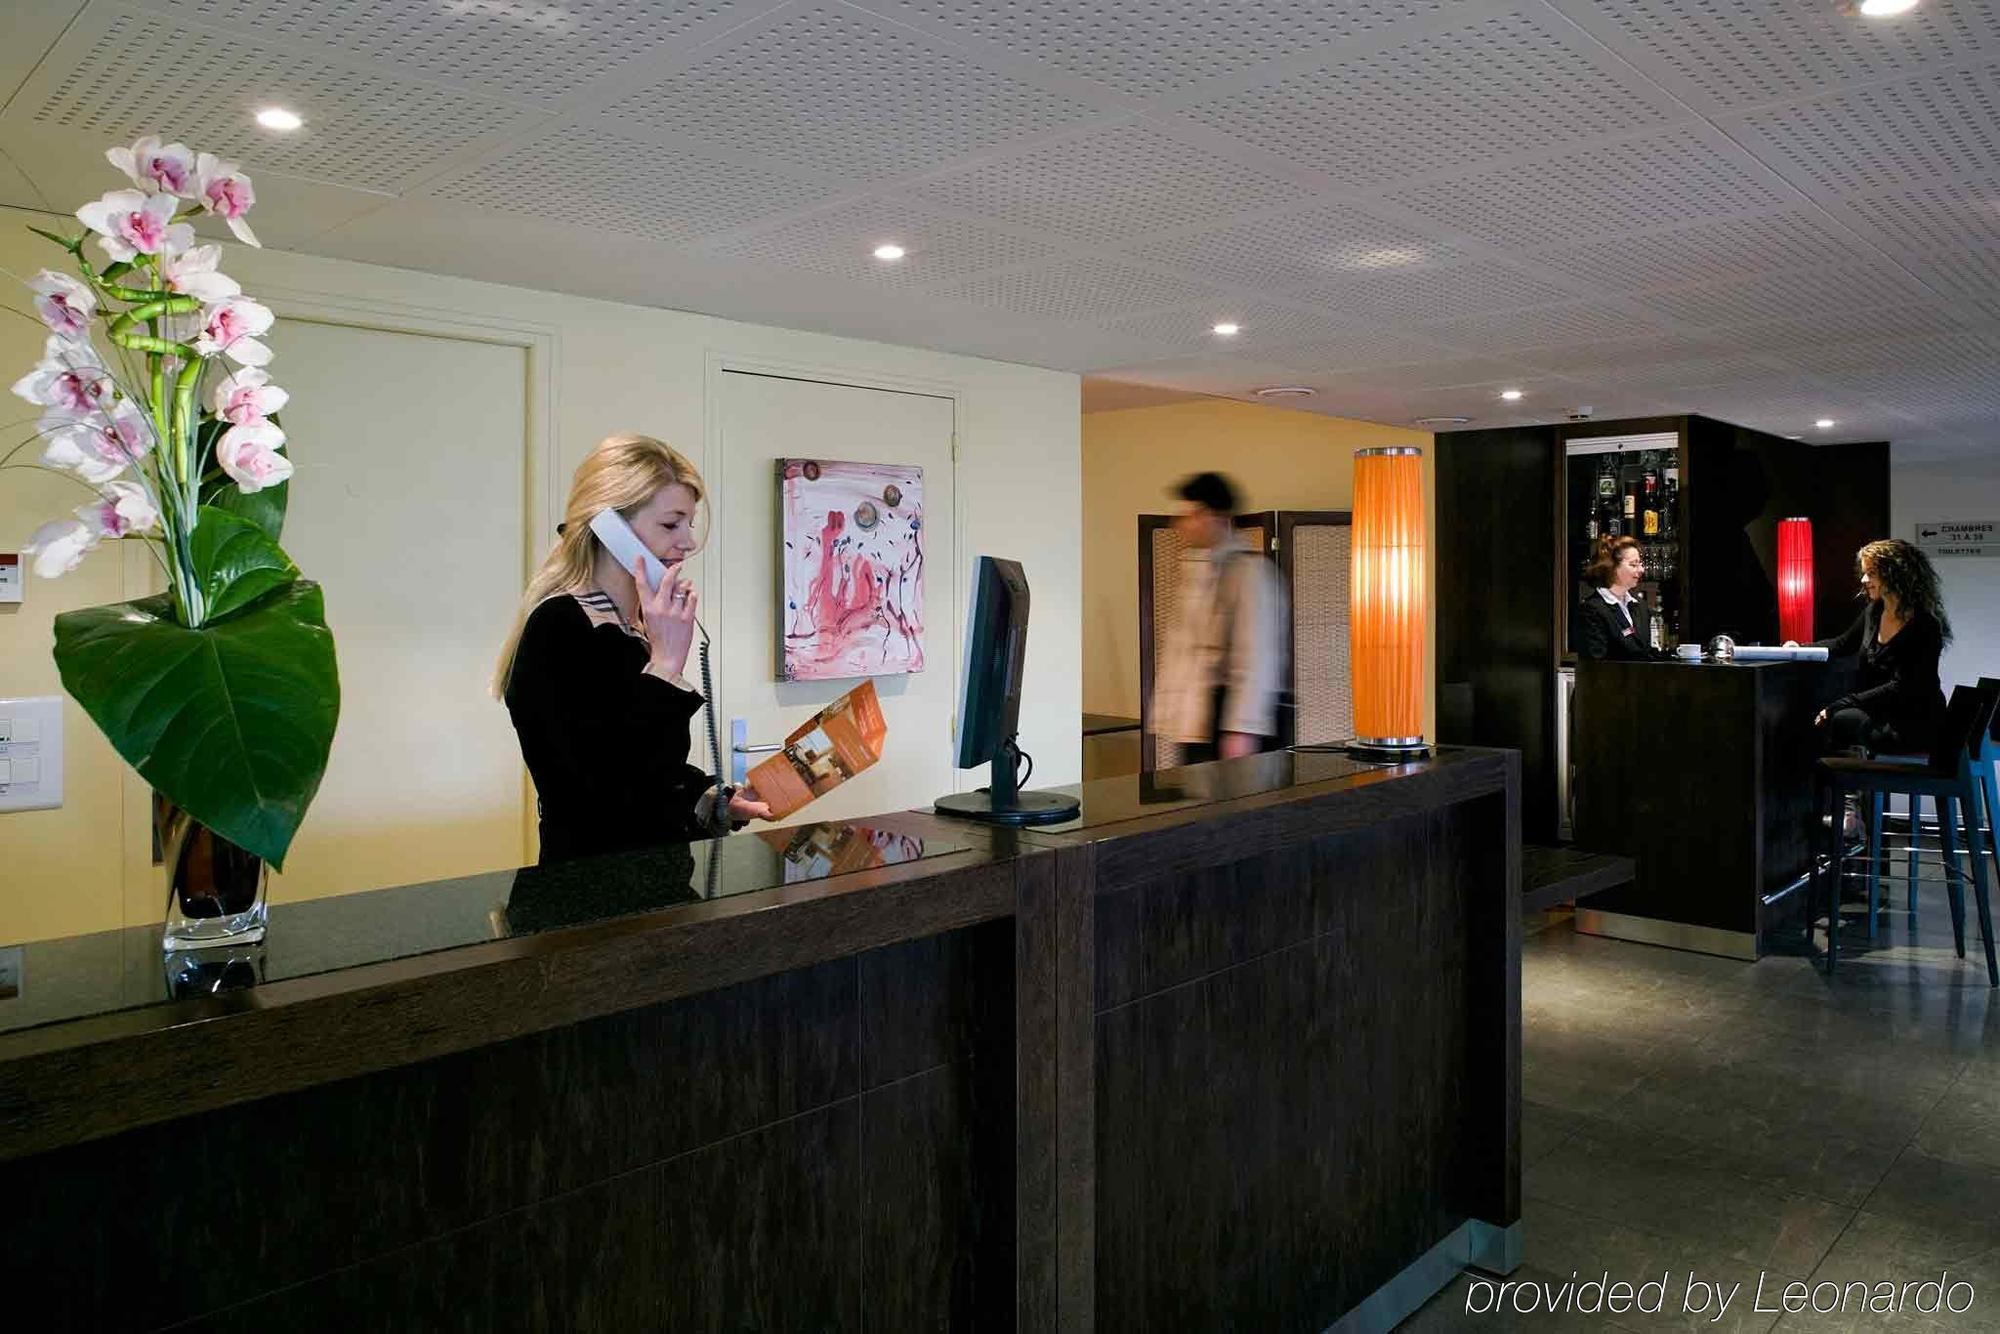 Hotel Mercure Rennes Cesson Экстерьер фото